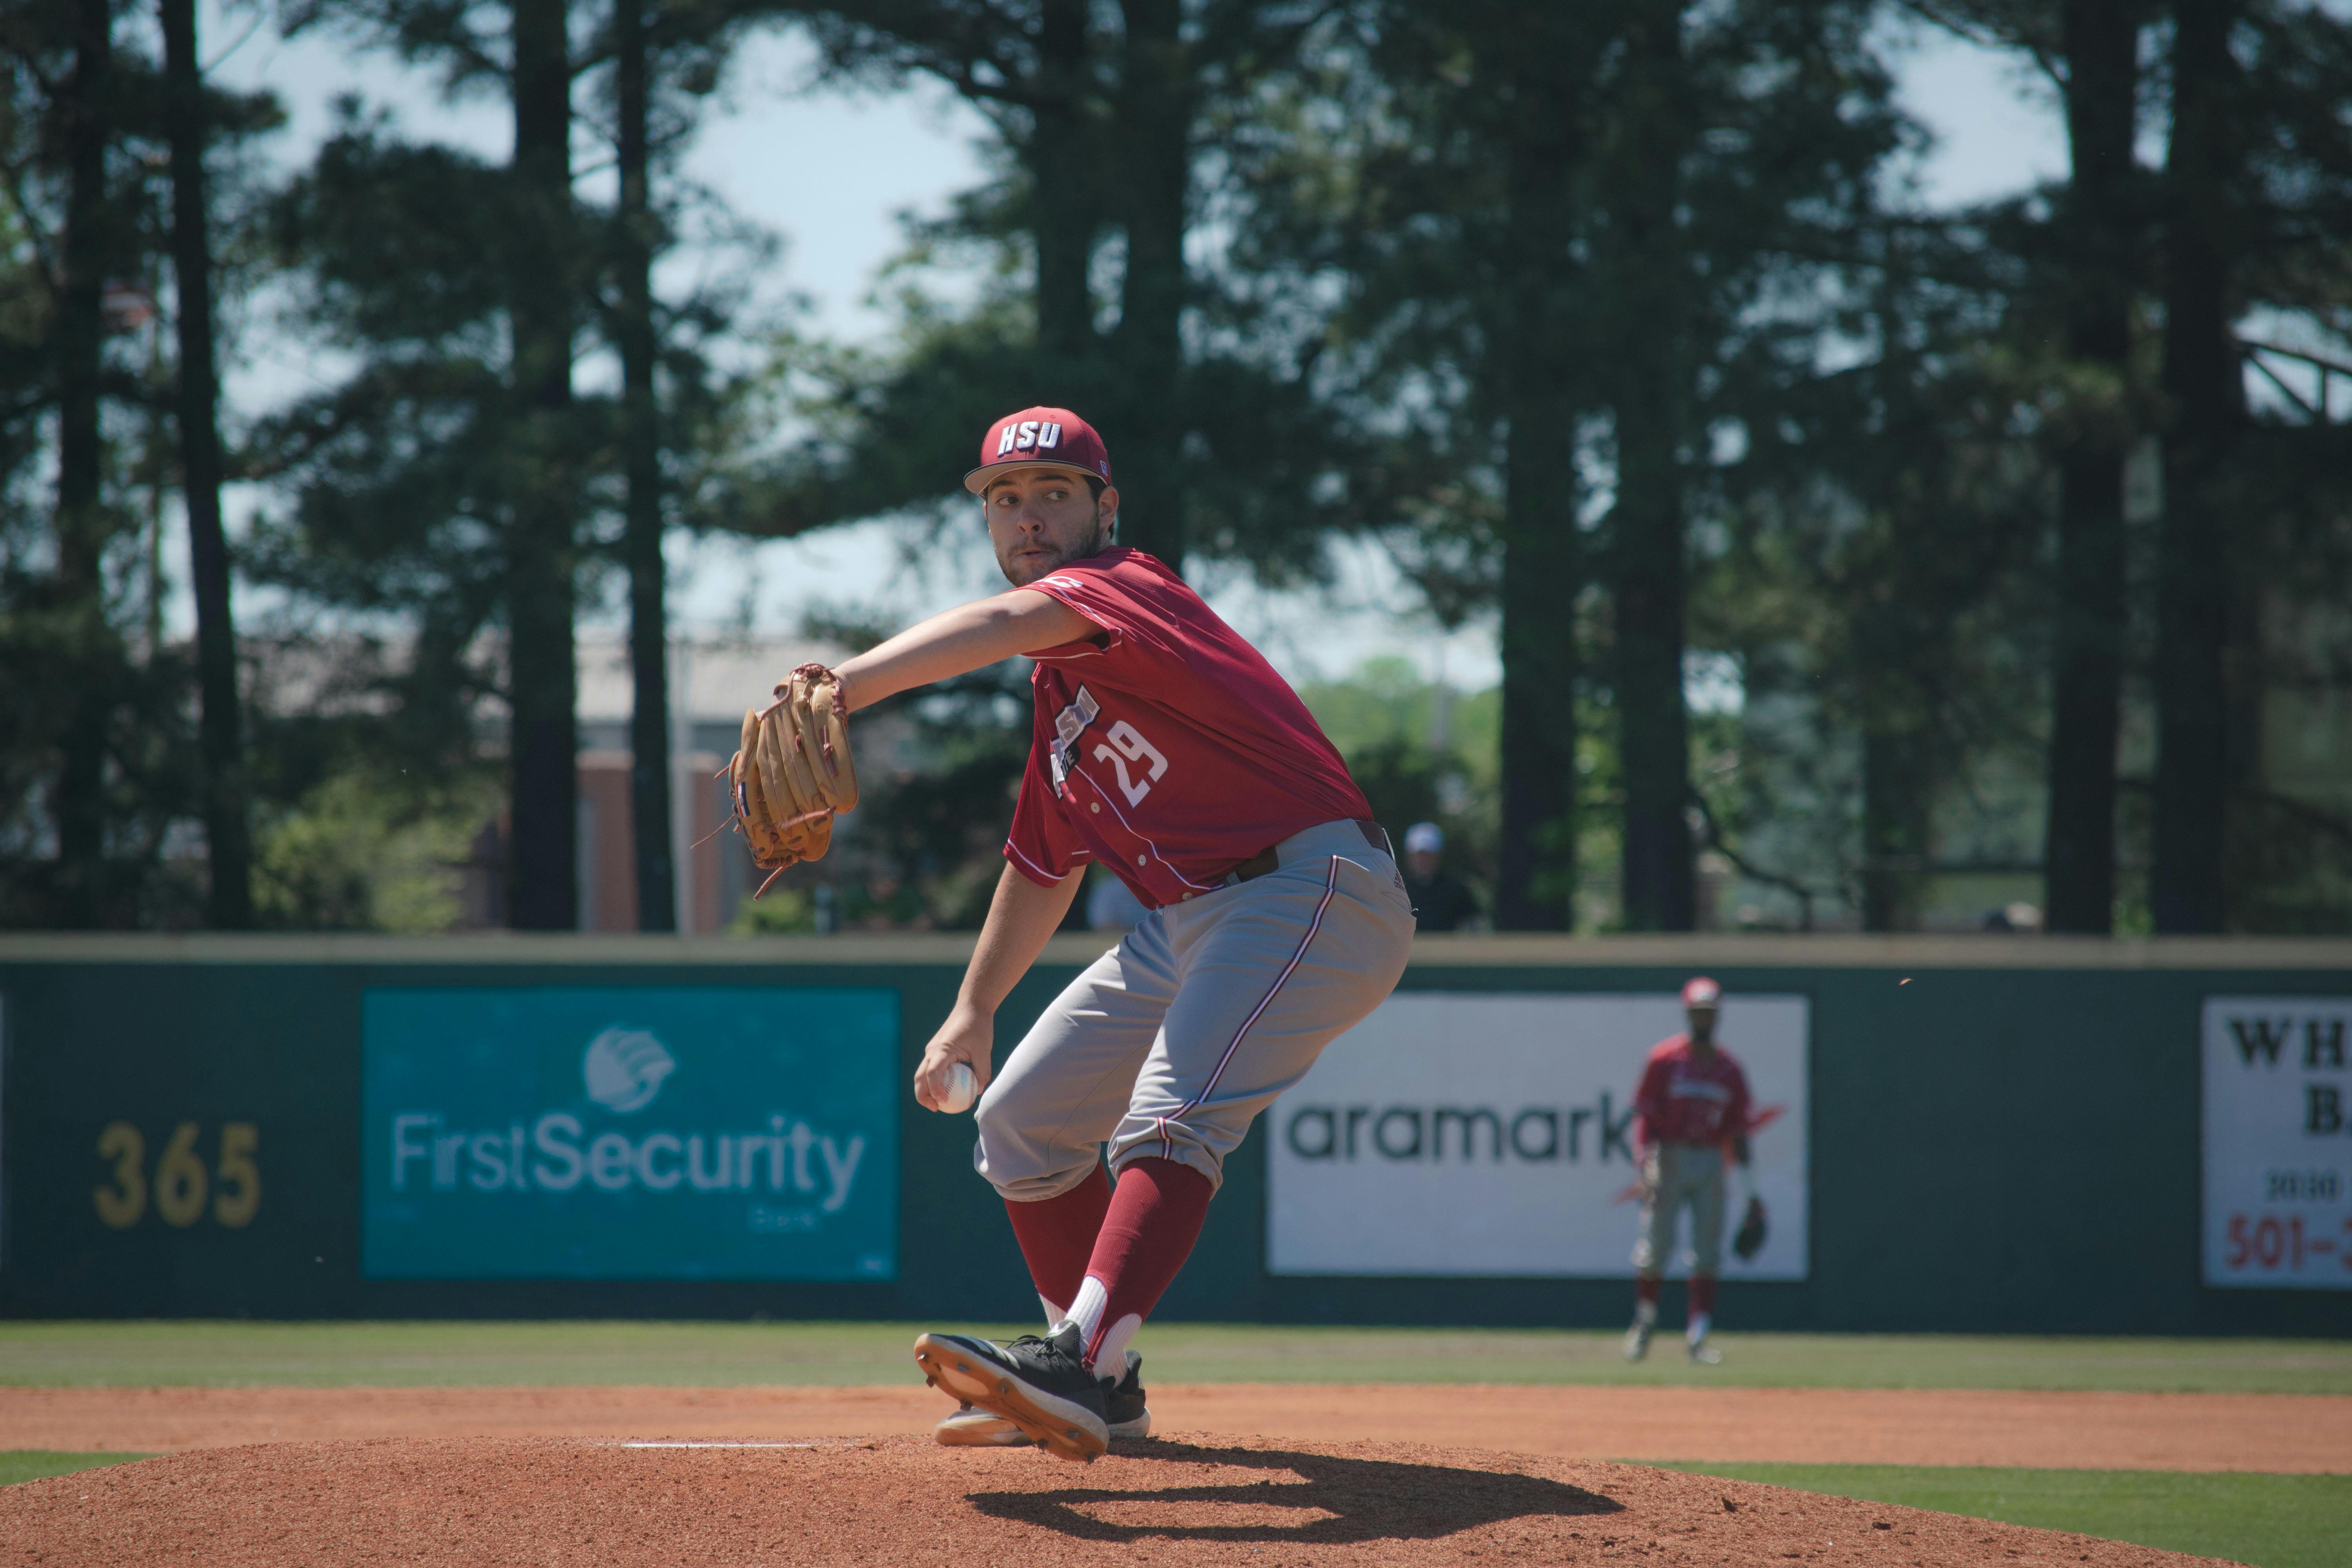 photo of pitcher throwing baseball